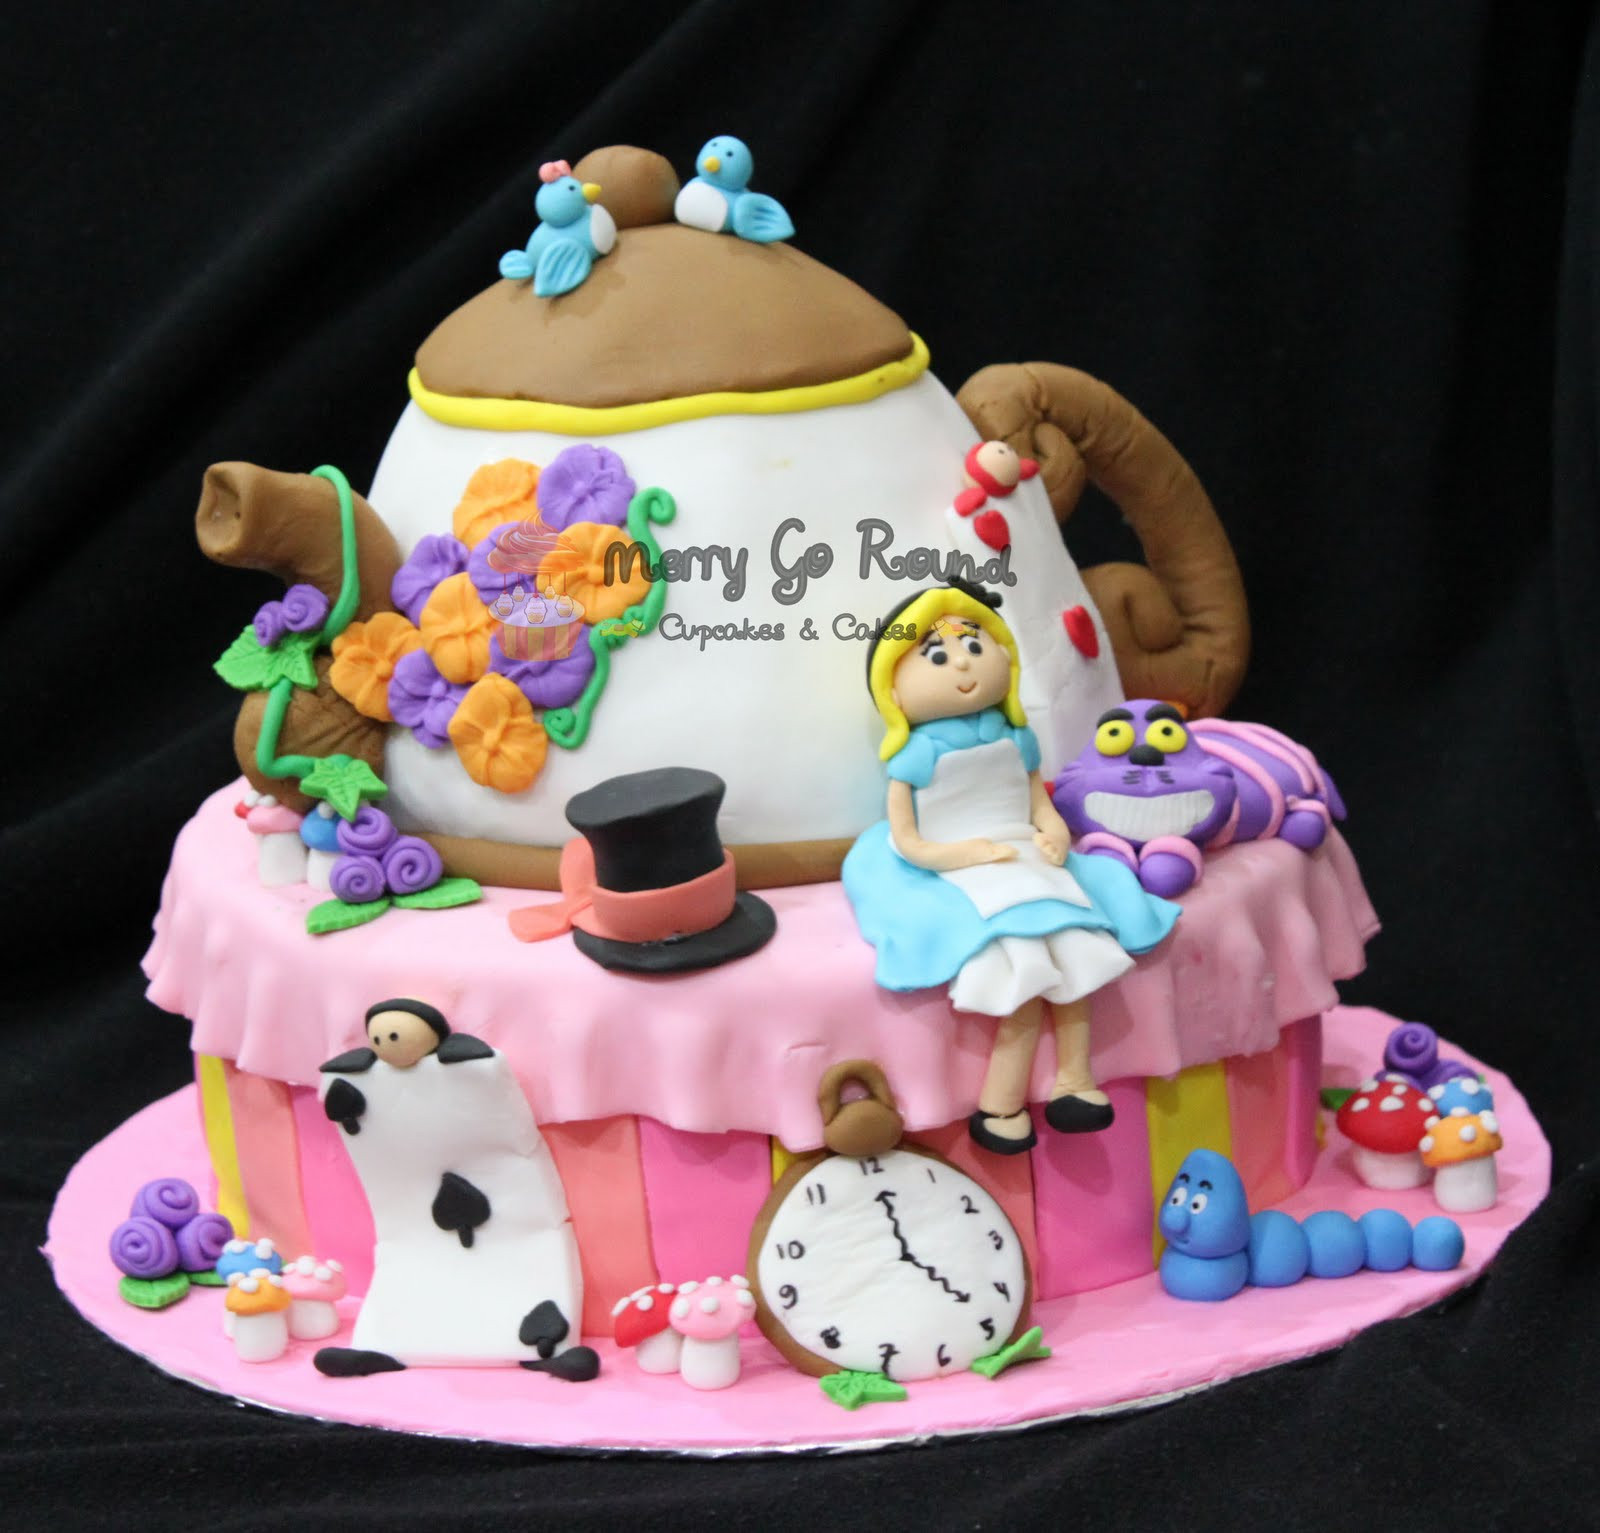 Alice In Wonderland Birthday Cake
 Merry Go Round Cupcakes & Cakes Birthday Cake Alice